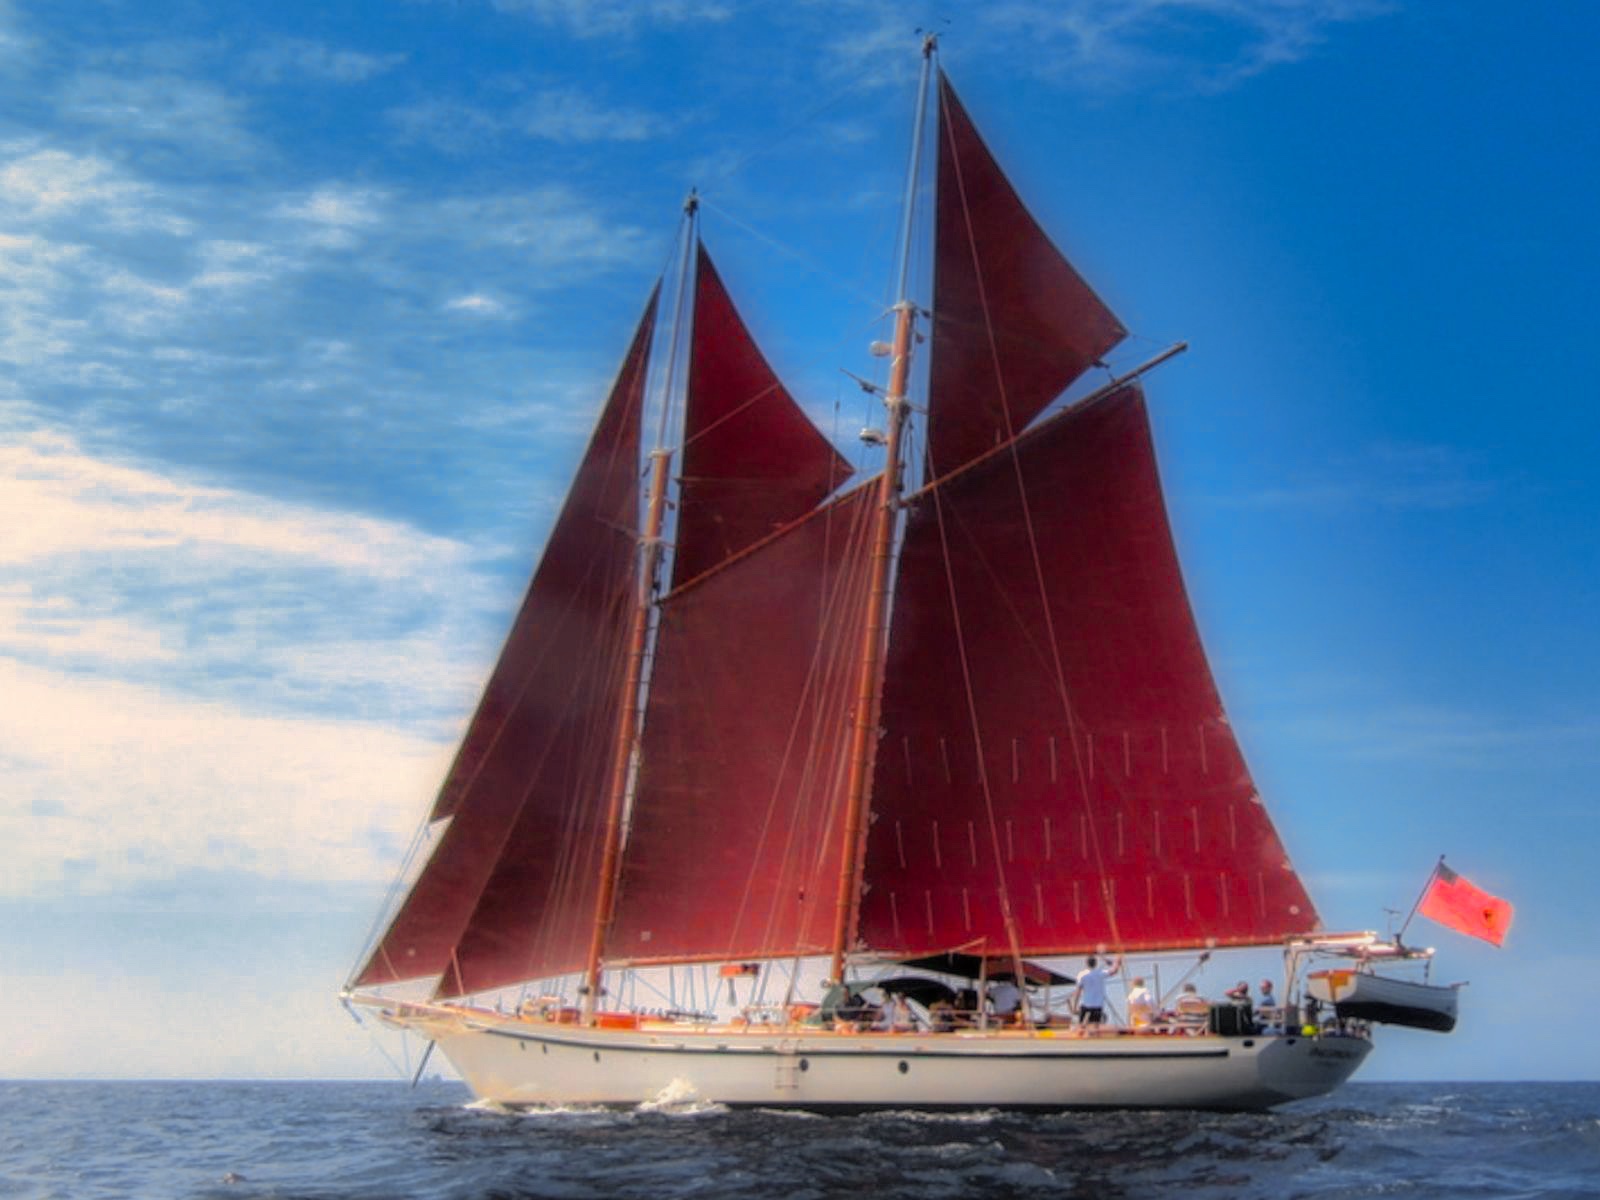 Dallinghoo full sail